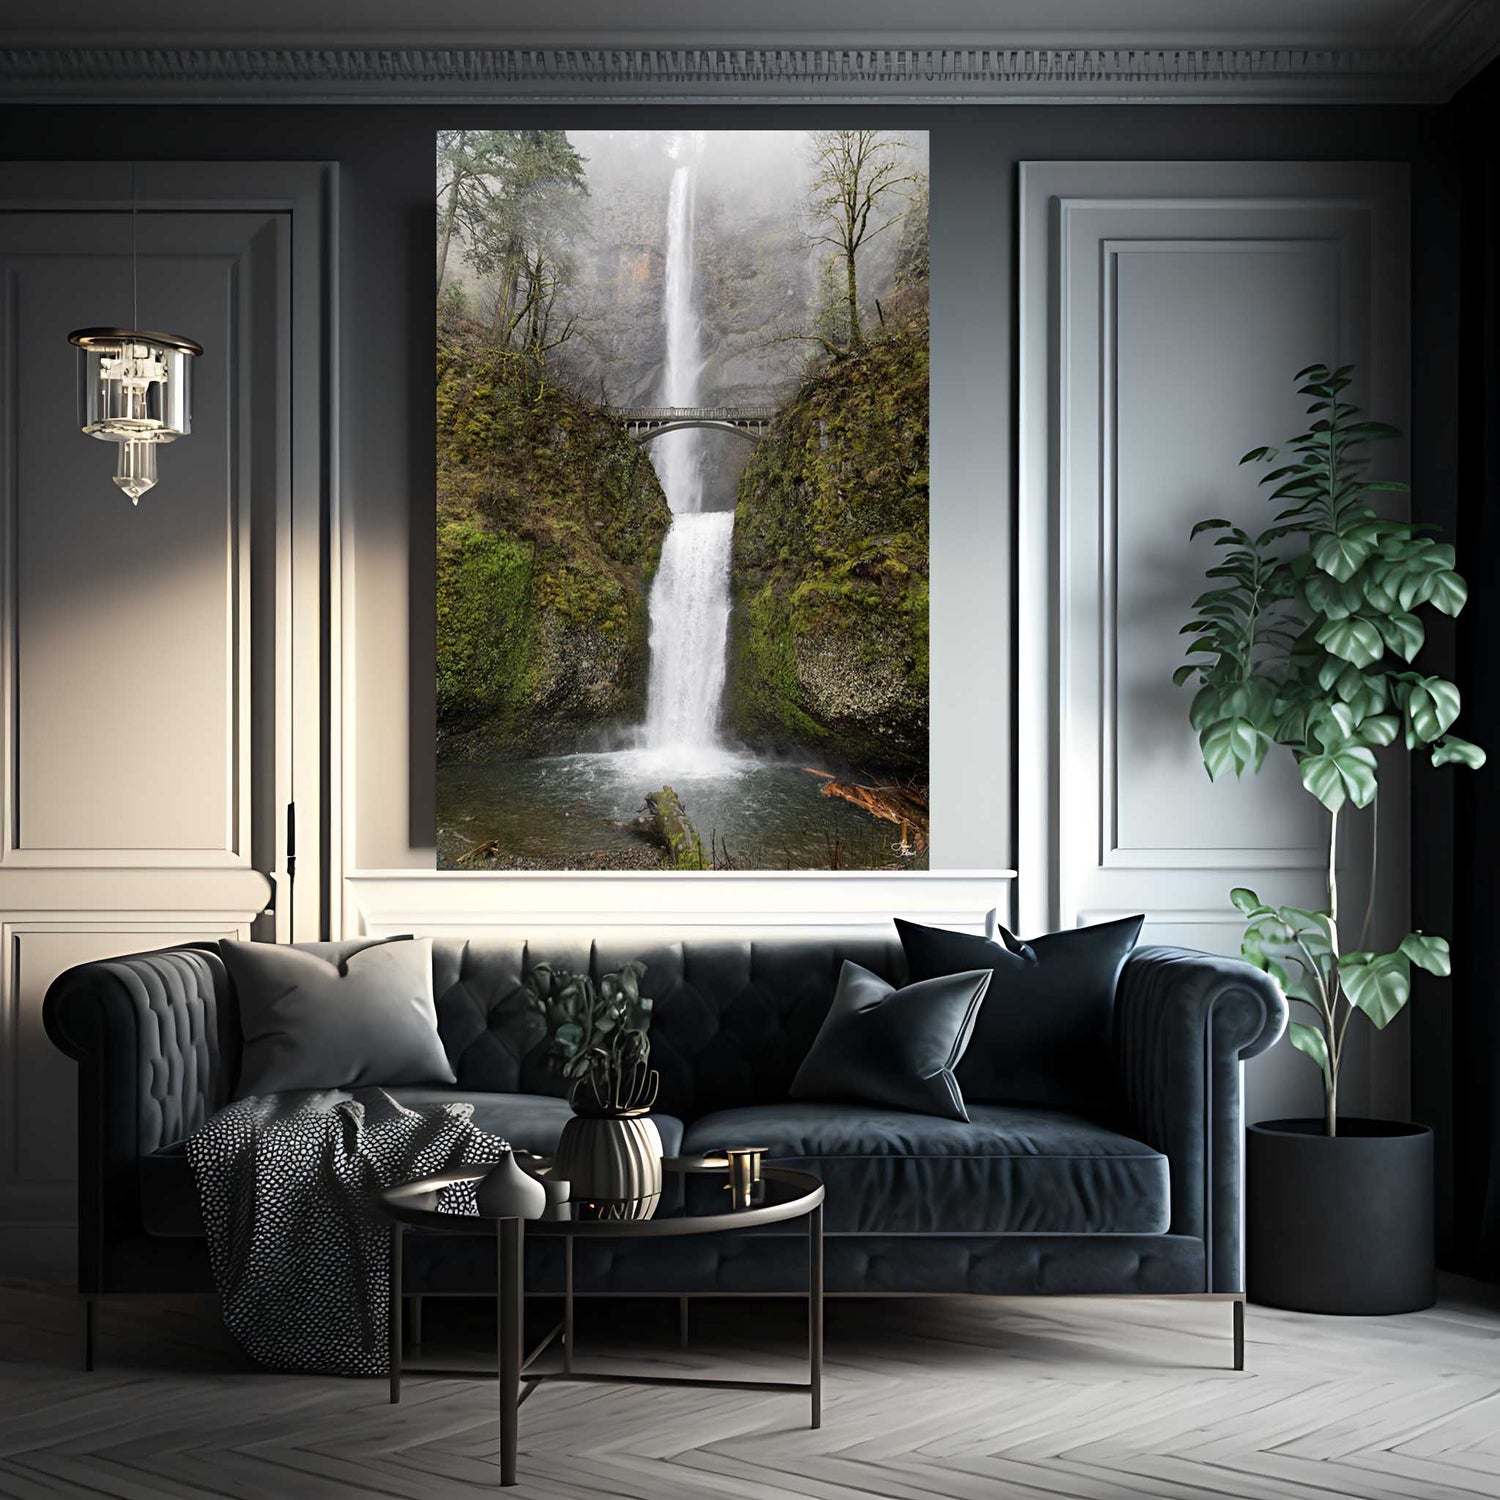 Multnomah Falls large wall art decor displayed in luxury living room